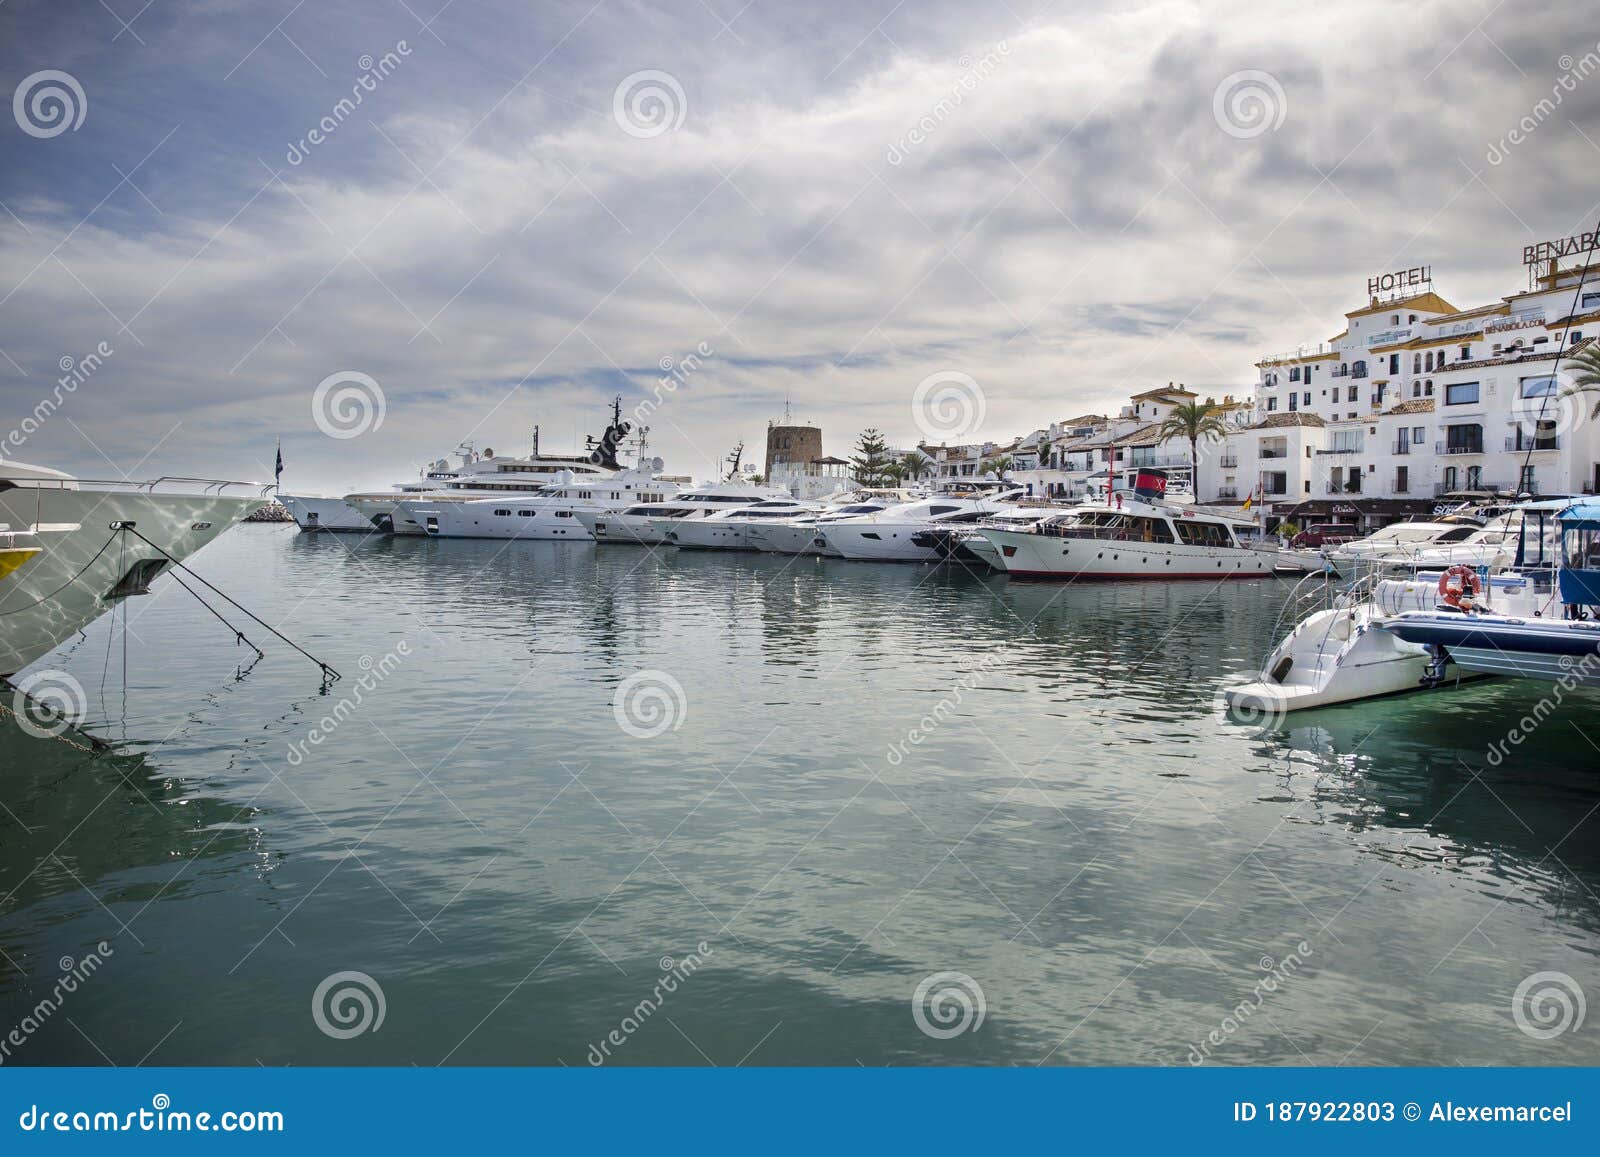 famous yachts in puerto banus